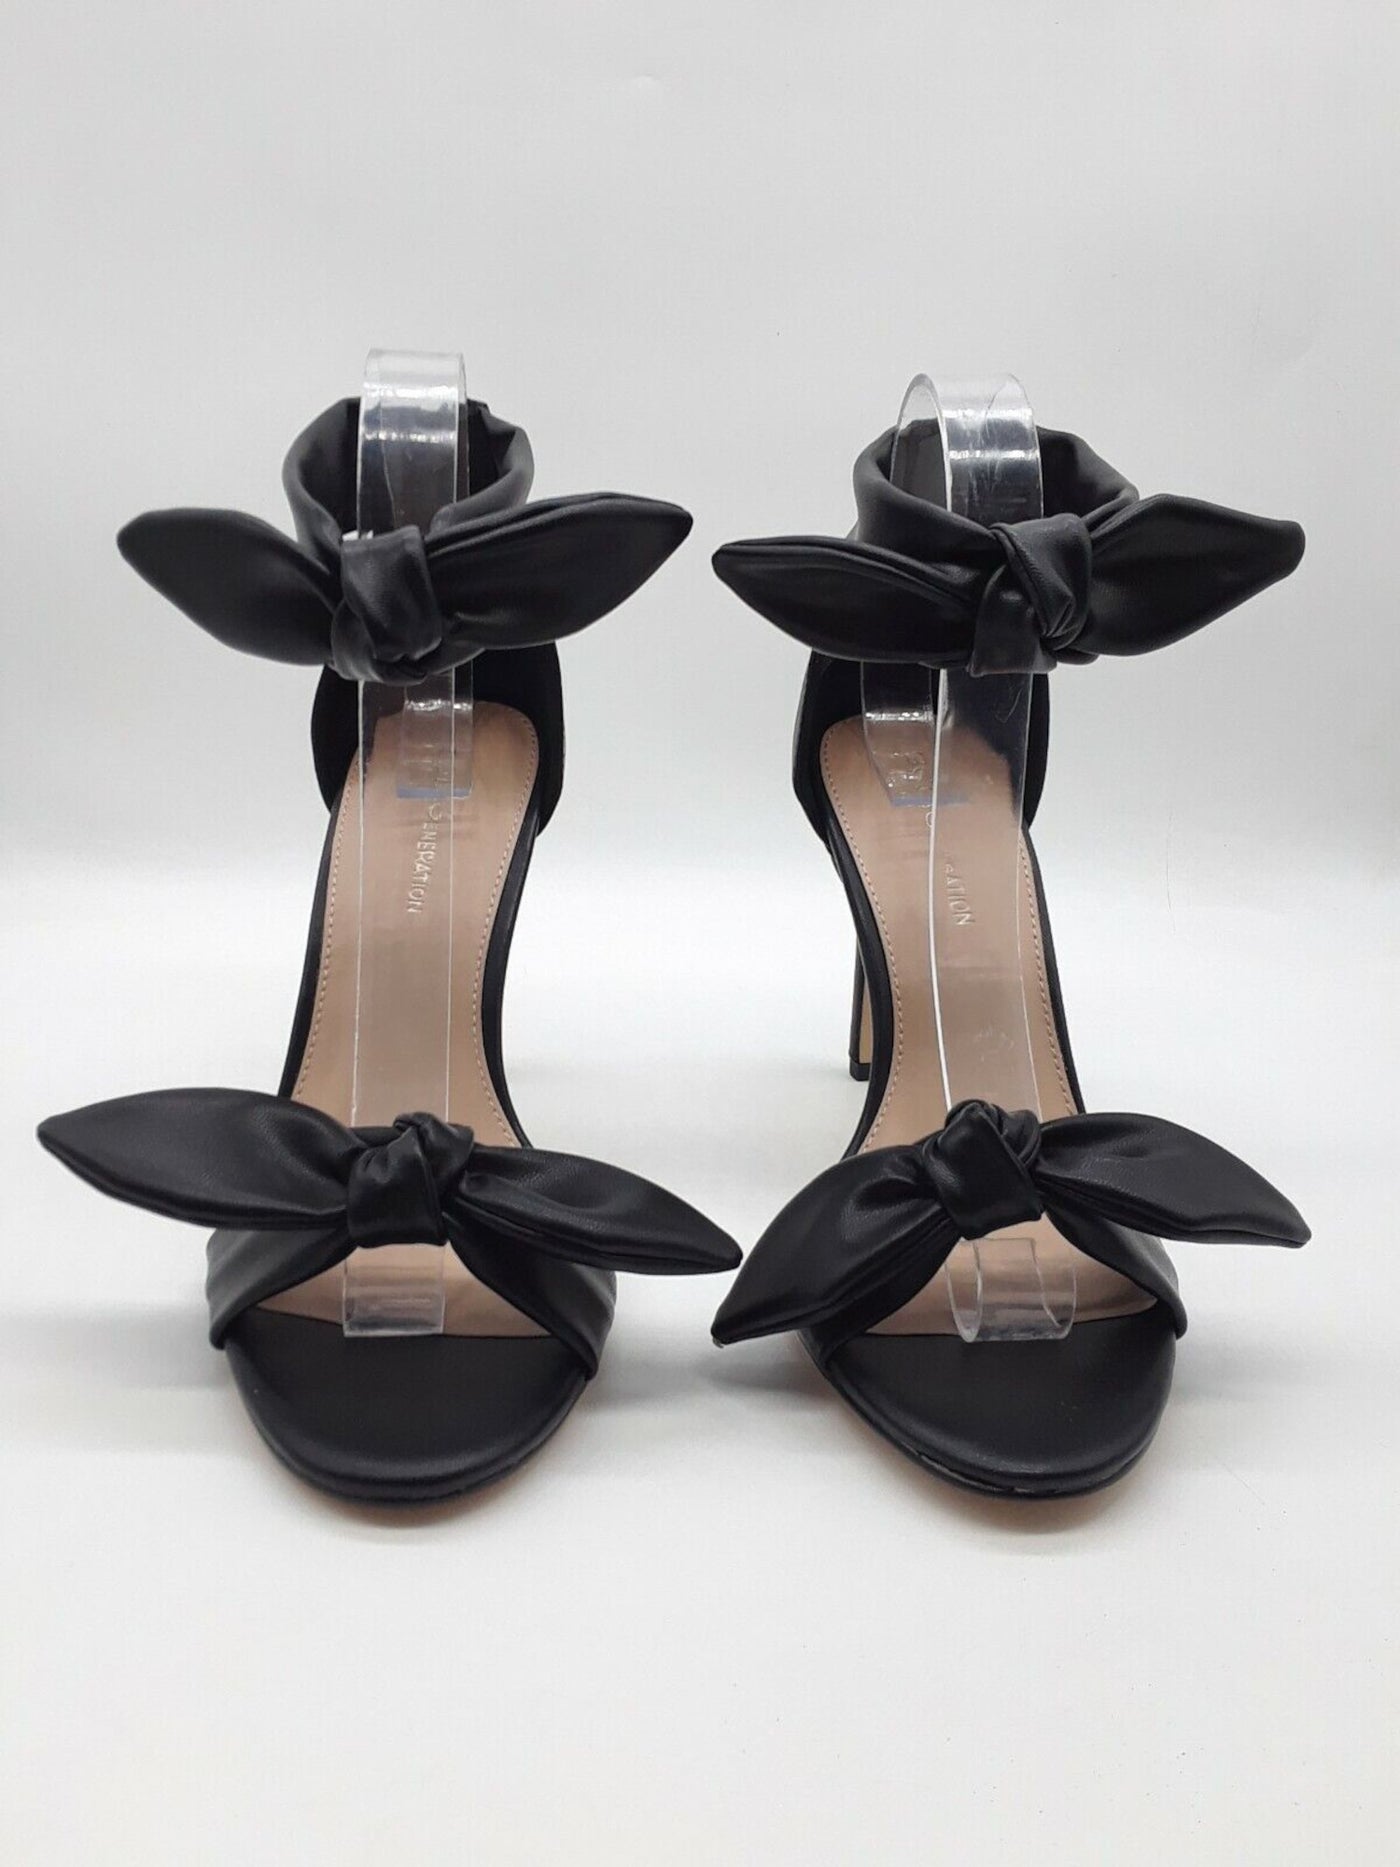 BCBGENERATION Womens Black Ankle Strap Bow Accent Jessa Round Toe Stiletto Zip-Up Dress Heeled Sandal 6